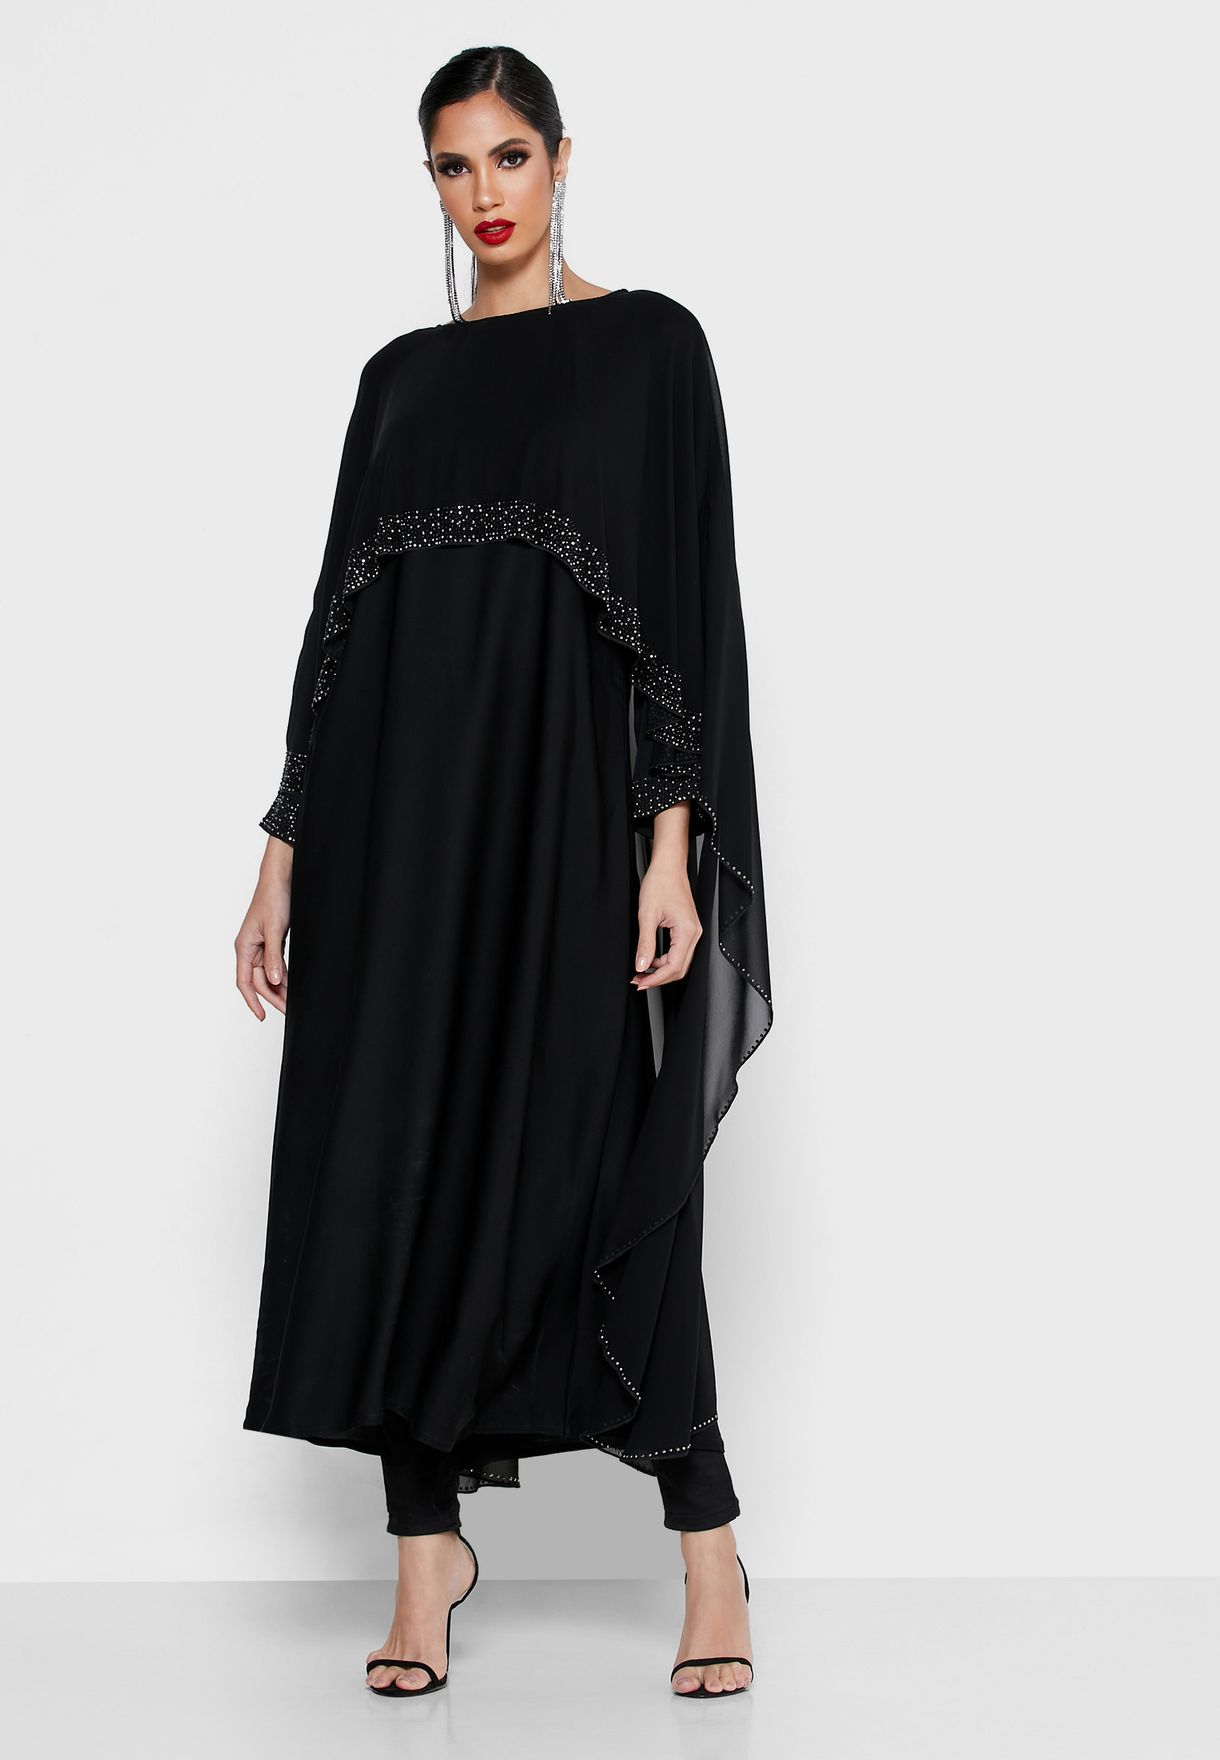 Buy Khizana Black Embellished Cape Abaya For Women In Riyadh Jeddah